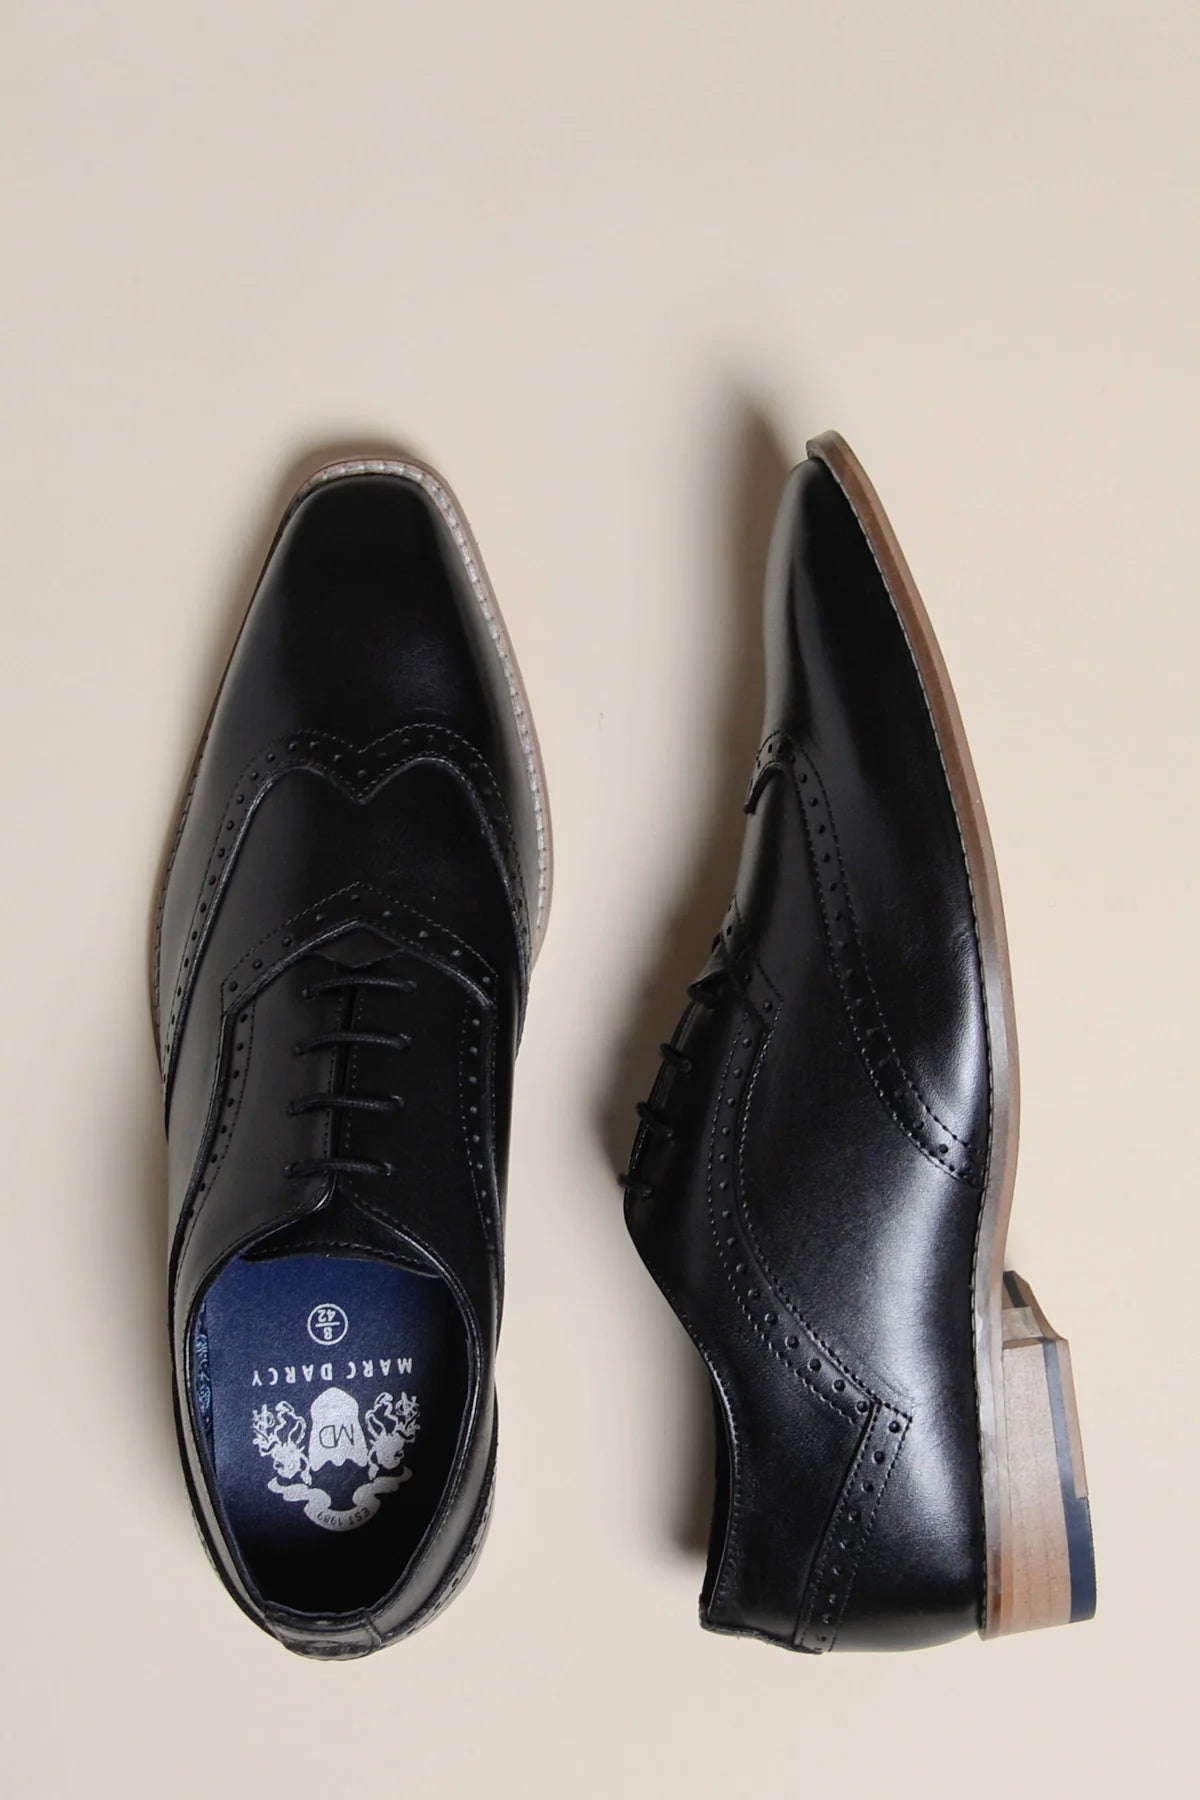 Chaussures en cuir noir, Marc Darcy Dawson - Wingtip brogue